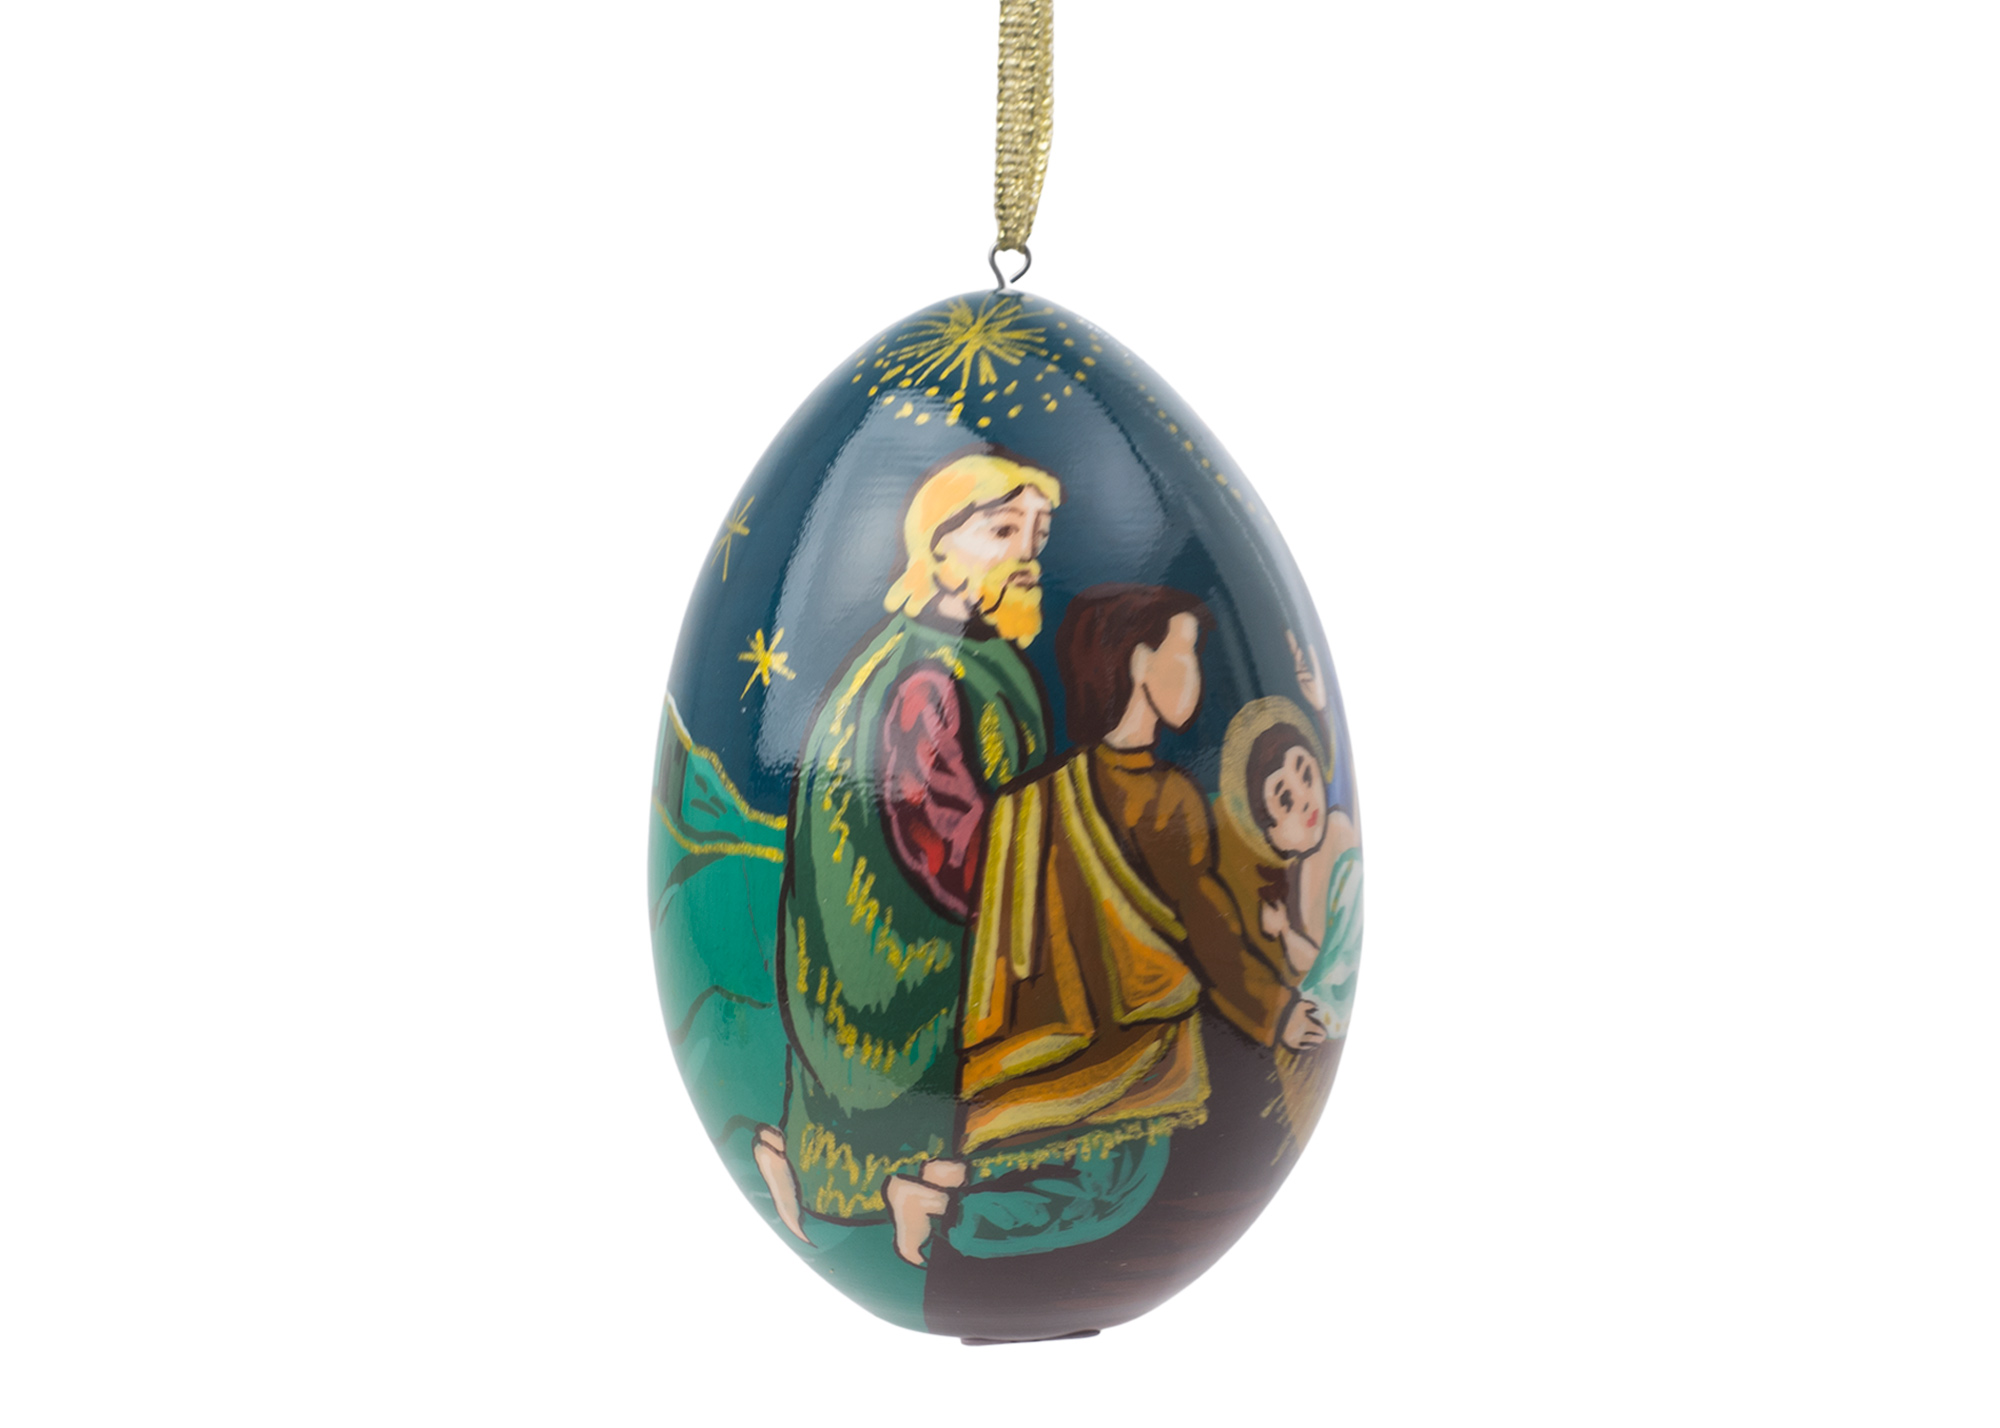 Buy Nativity Ornament – Western style, 3" at GoldenCockerel.com